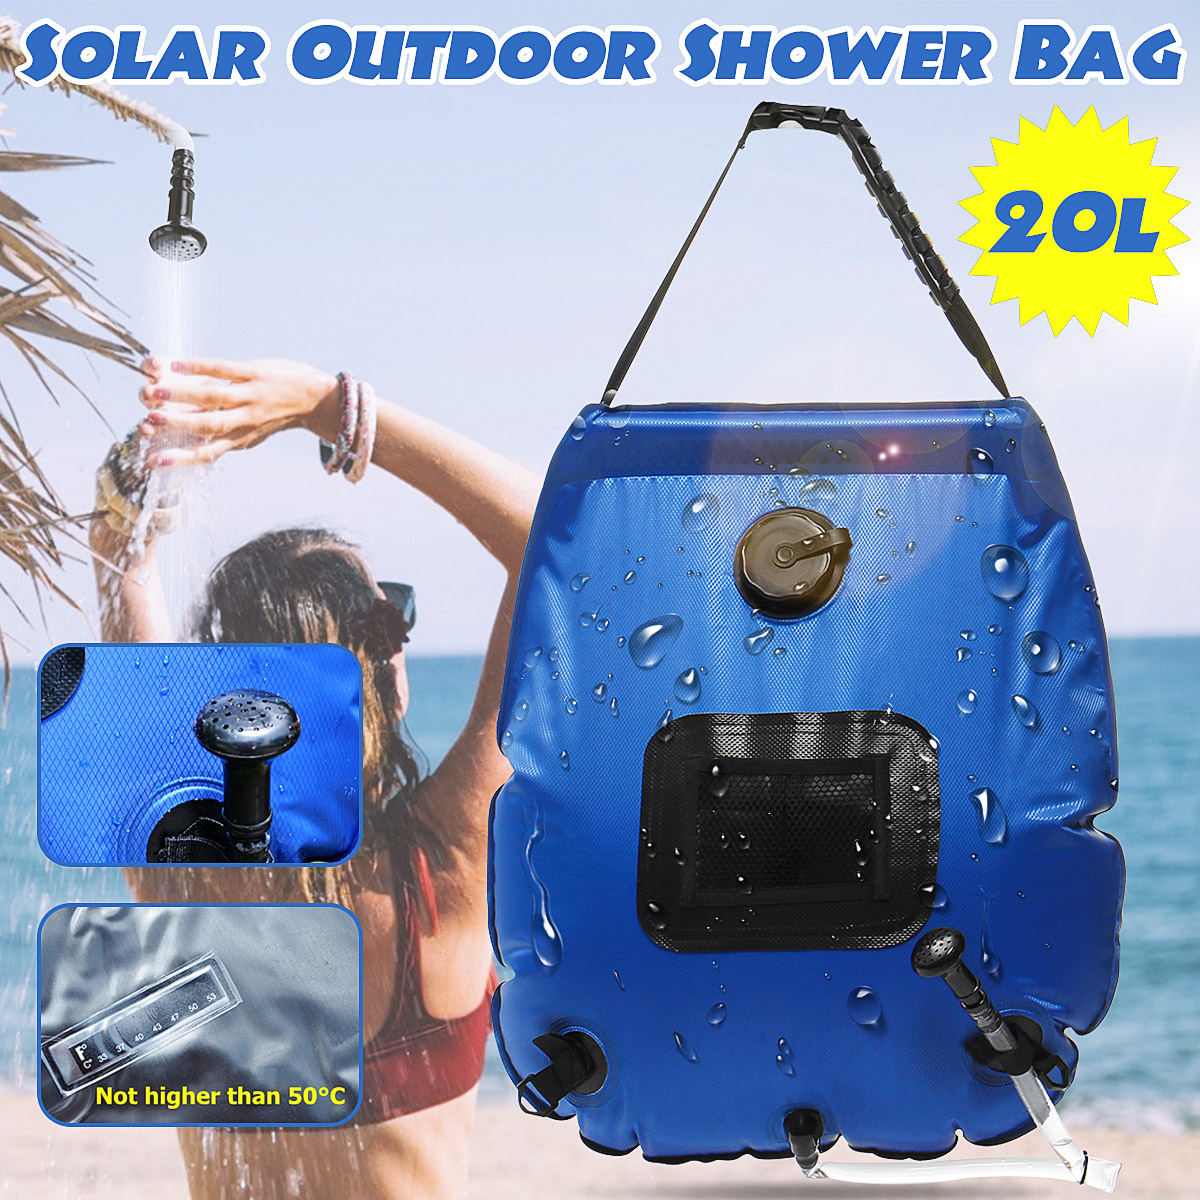 20L-Solar-Shower-Bag-Solar-Heating-Camping-Shower-Bag-Heating-Pipe-Bag-for-Summer-Beach-Climbing-Fis-1732109-1